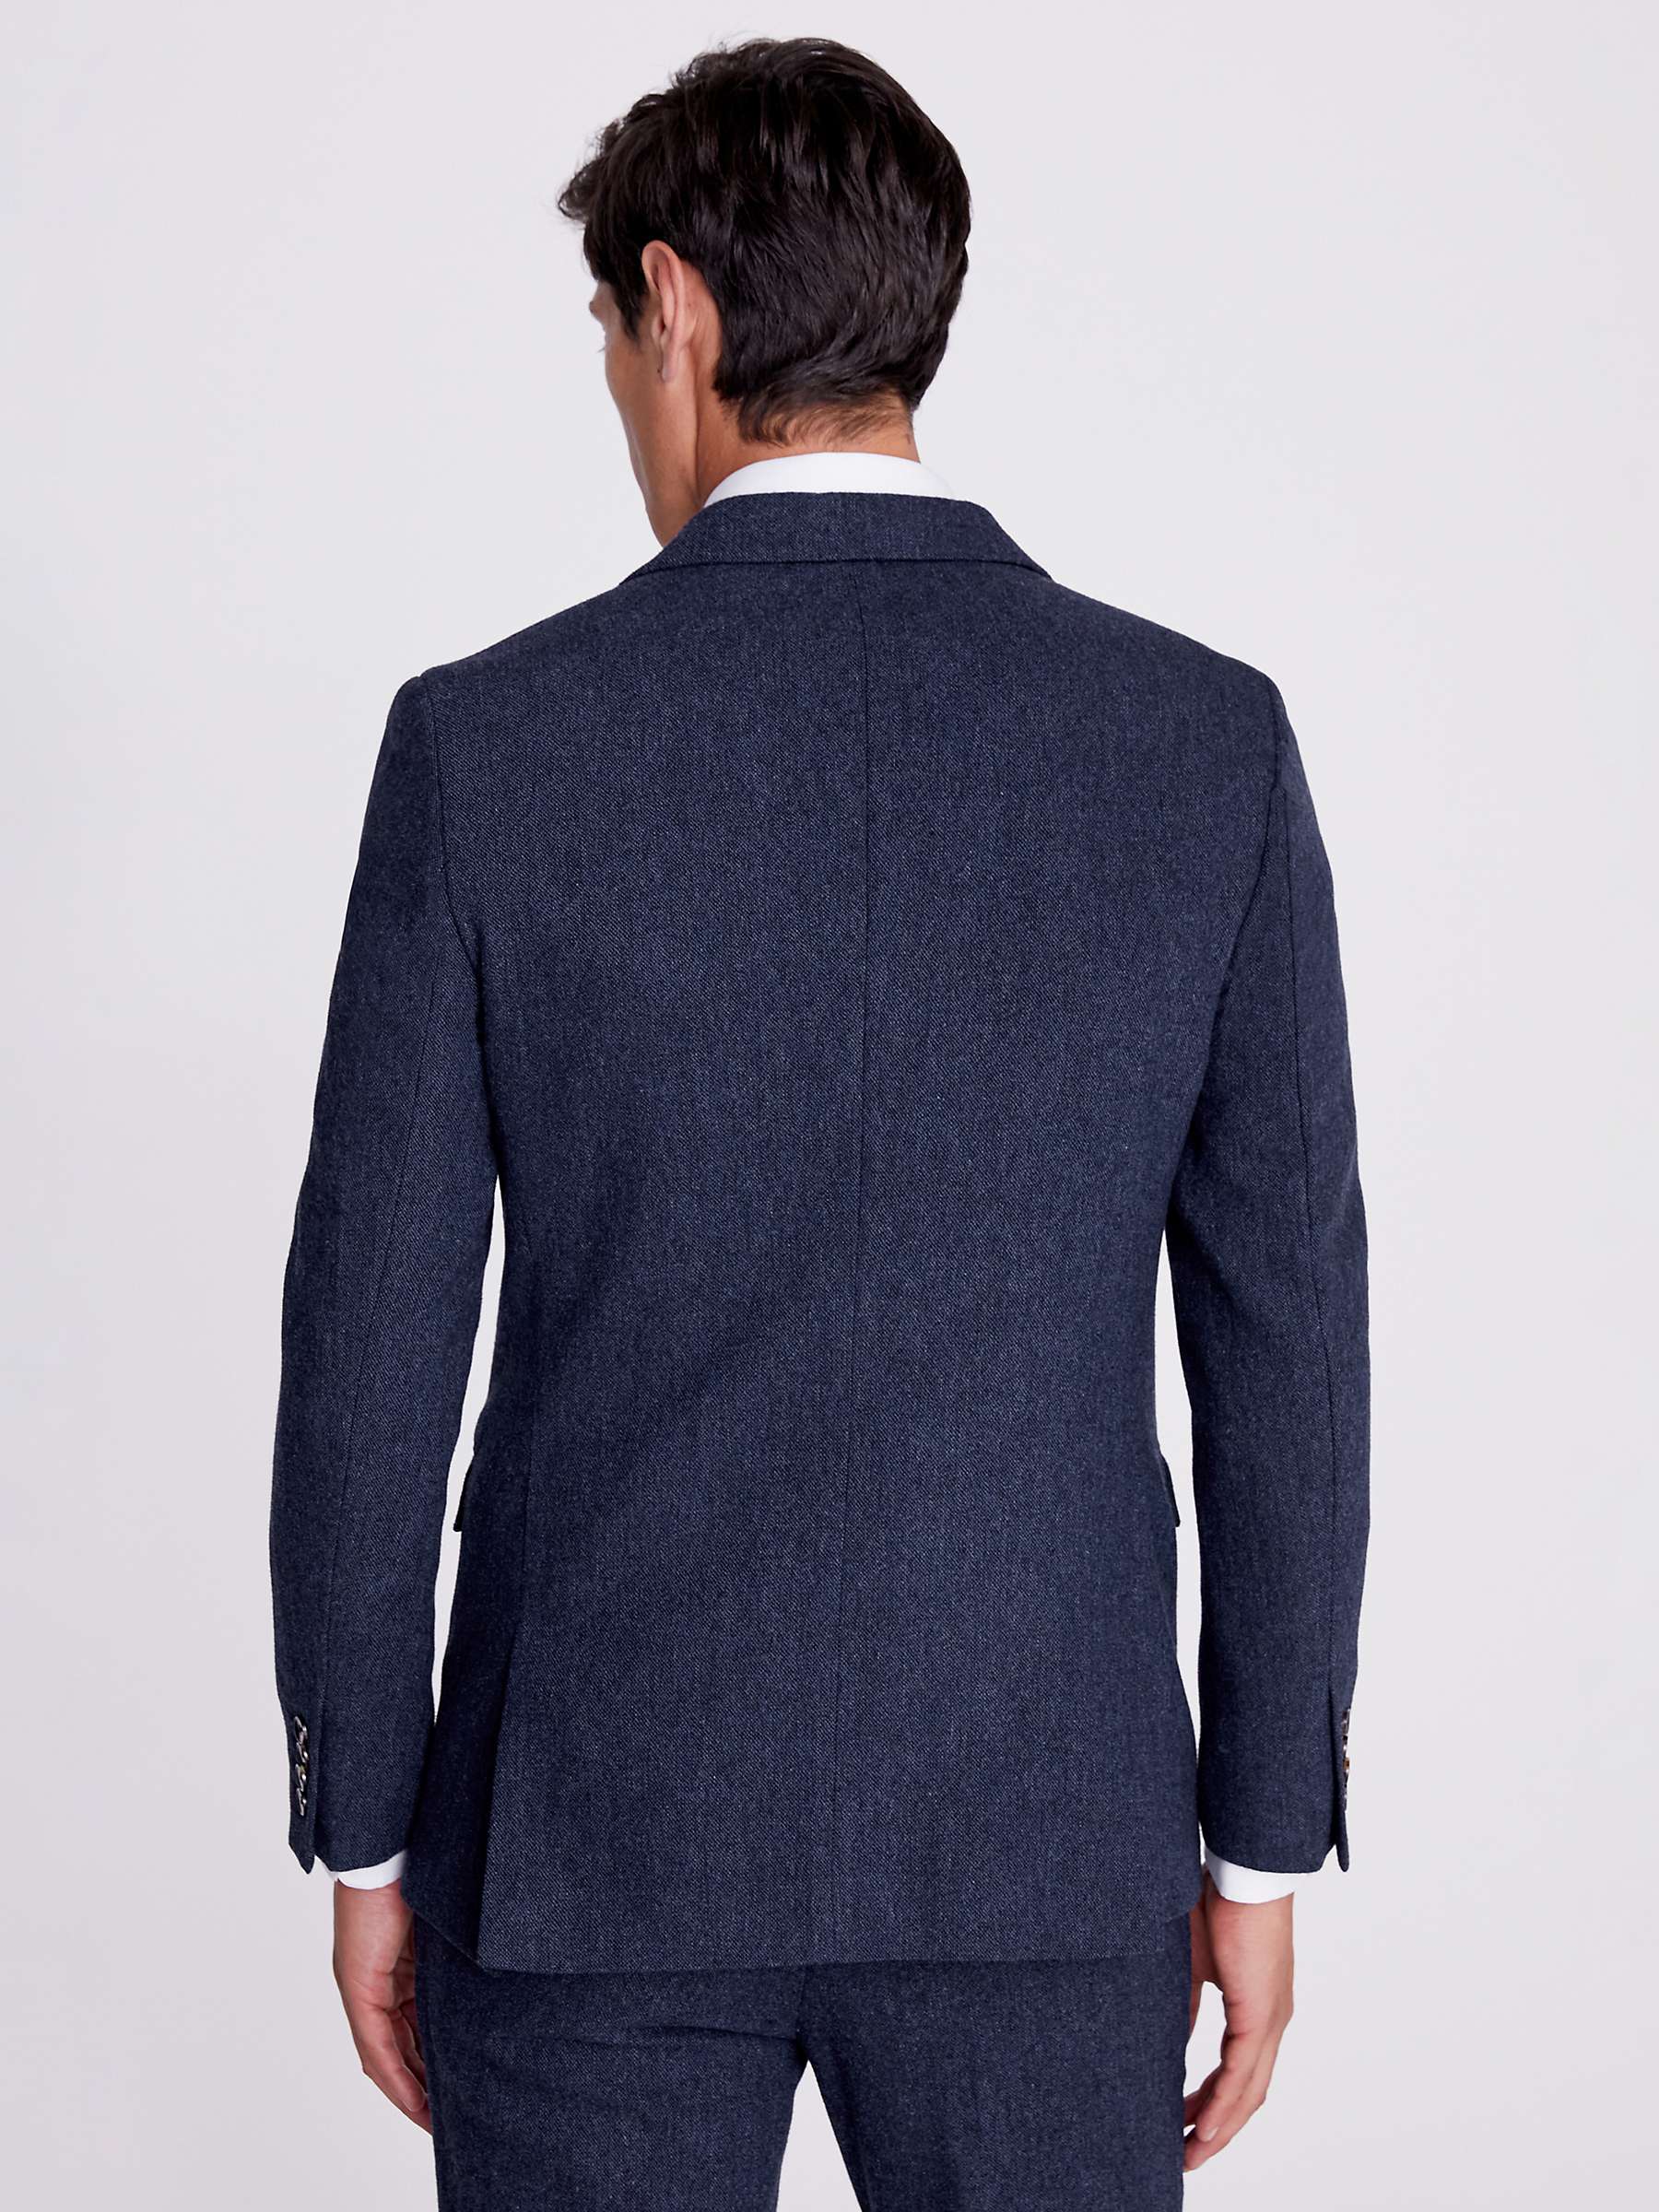 Moss Slim Fit Donegal Tweed Jacket at John Lewis & Partners